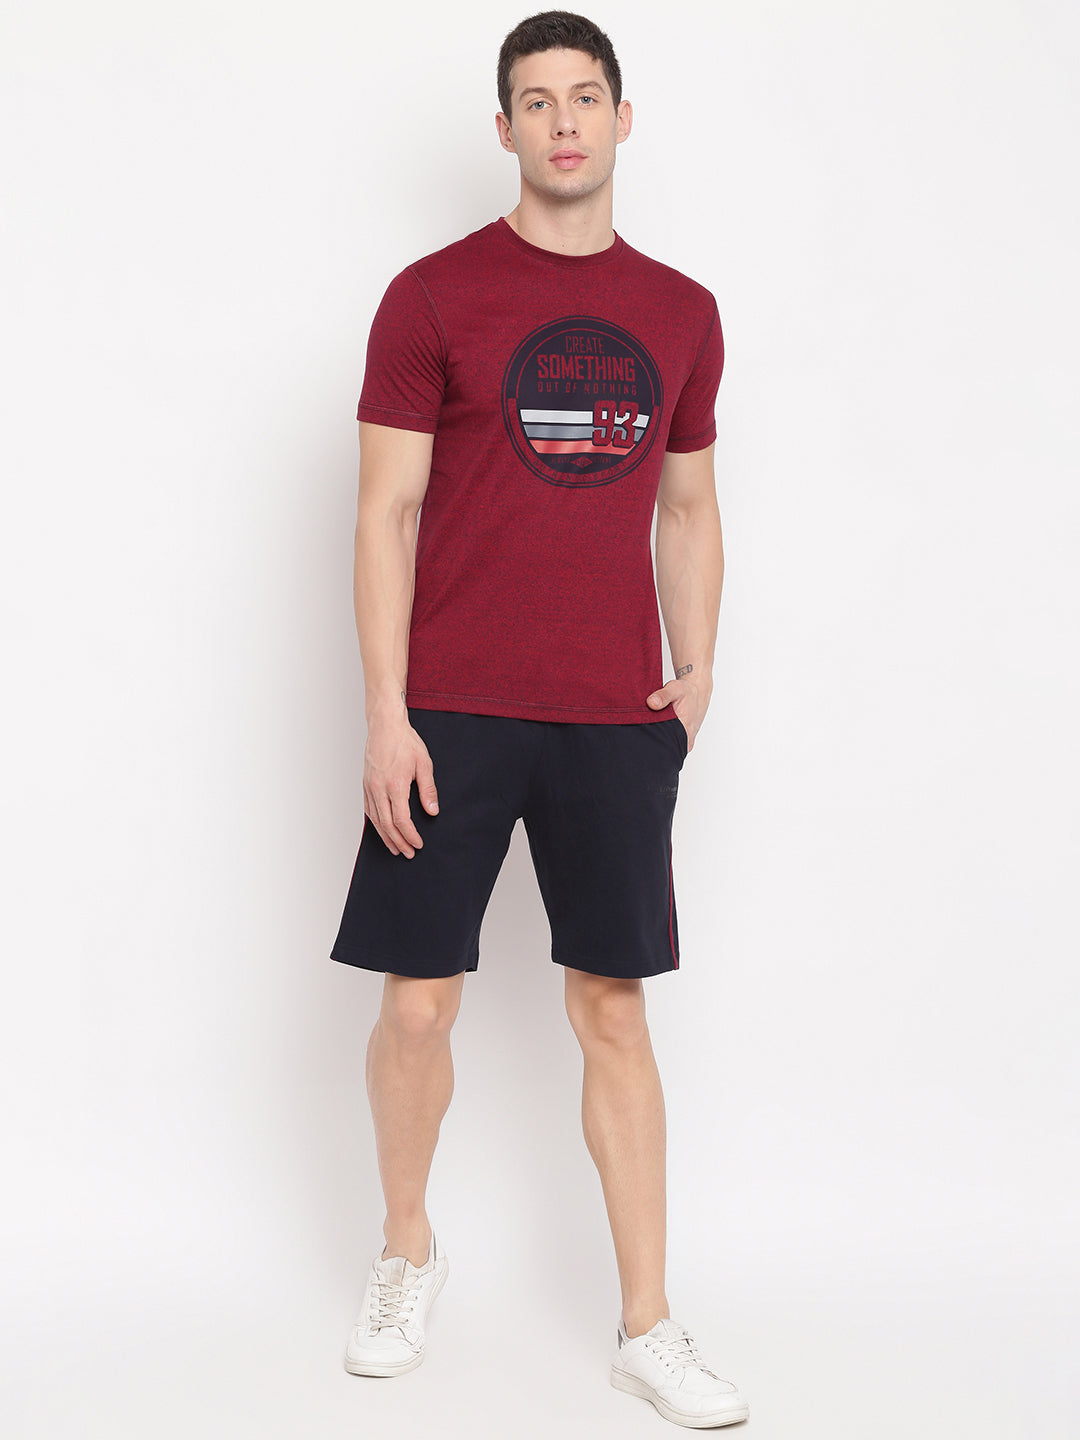 Richlook: Mens clothing | Shirts, Jeans, T-Shirts, Sweatshirts